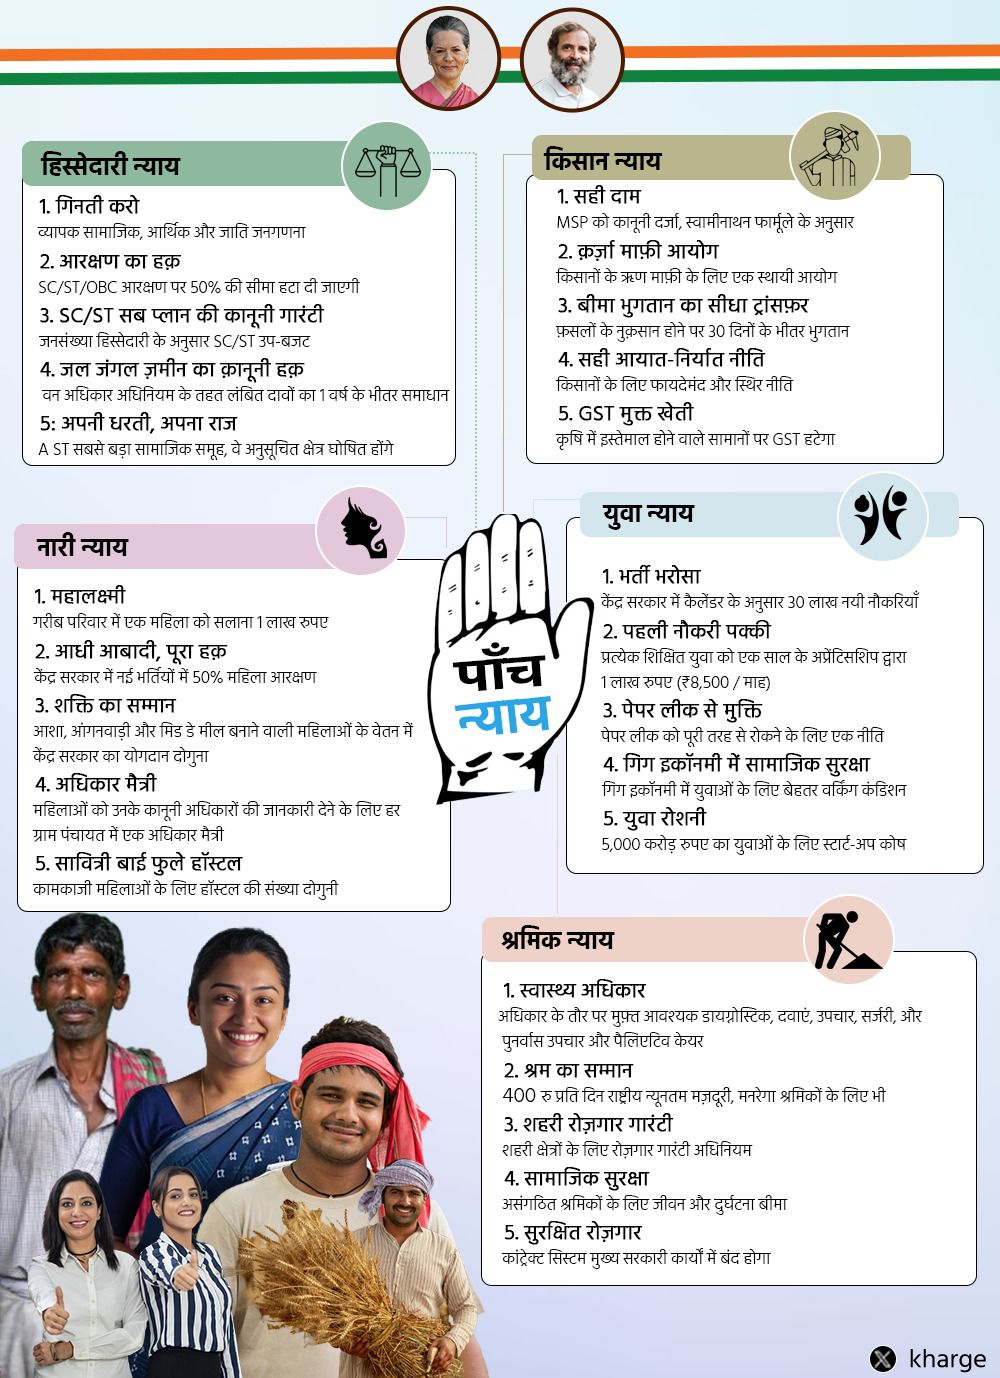 Congress garanty